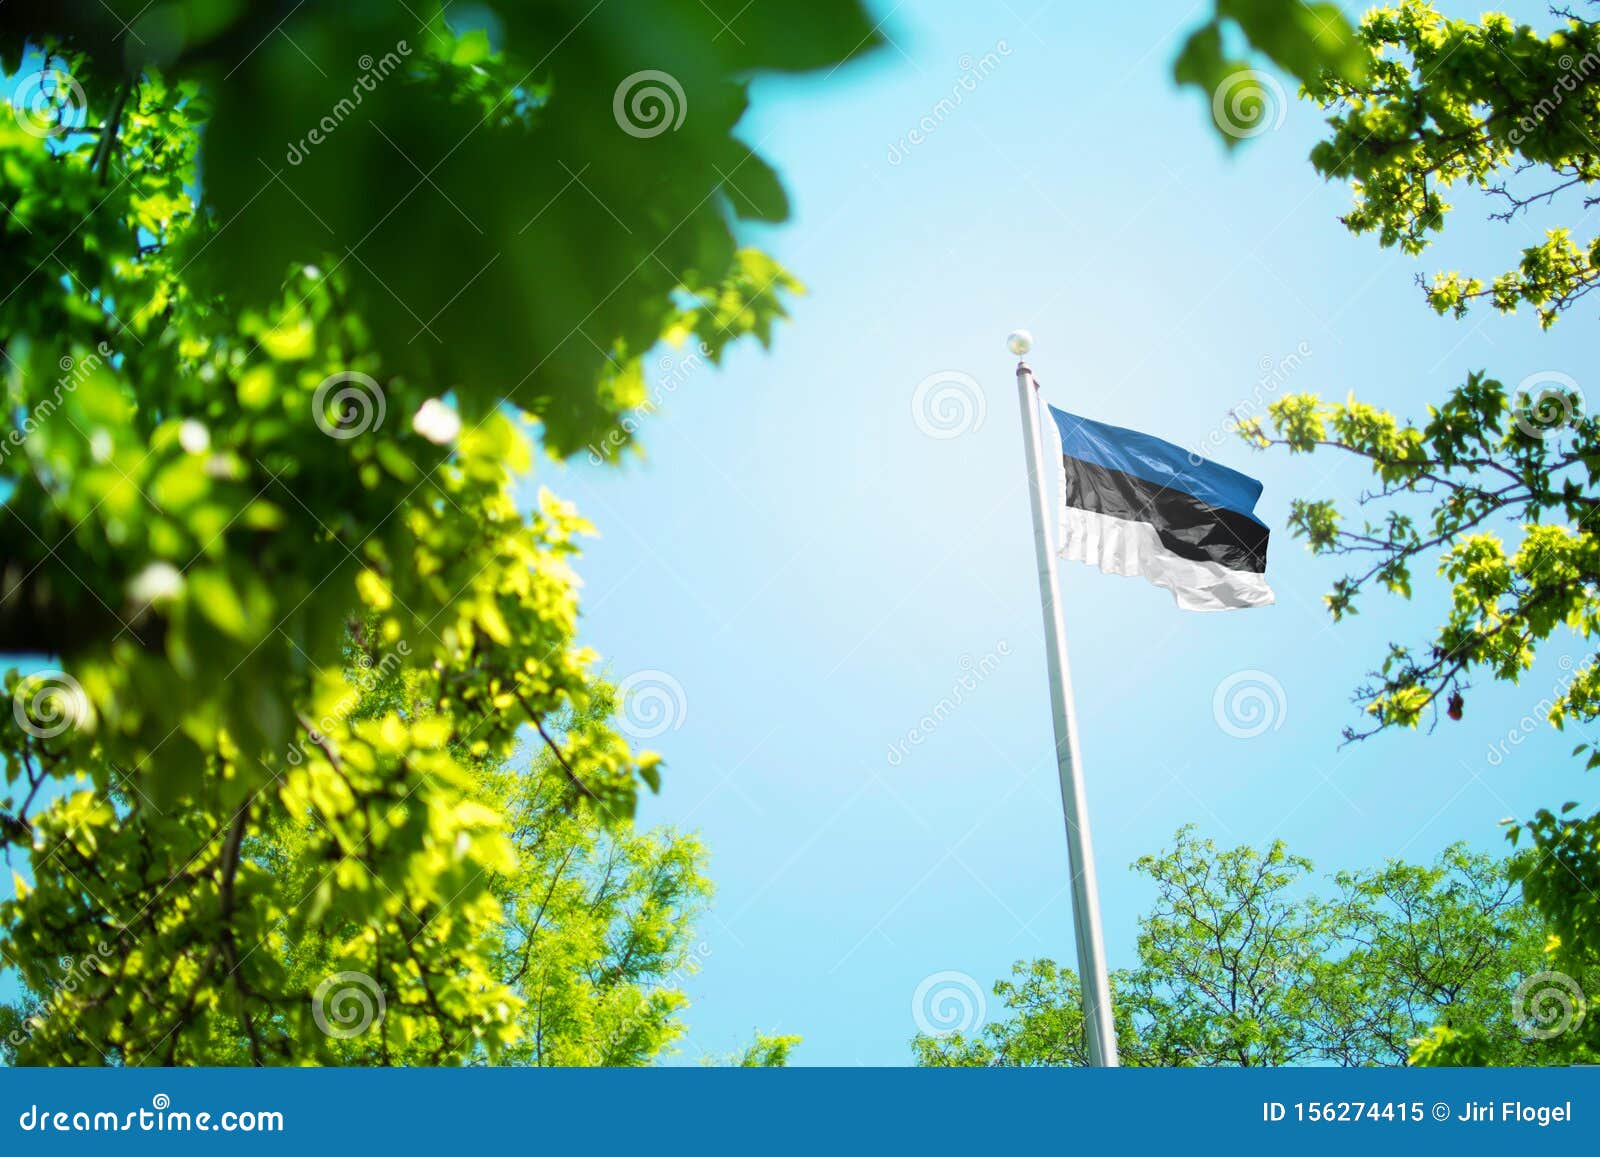 Fæstning afkom Indkøbscenter Estonia Flag, Estonian Flag Waving in the Wind between Trees Stock Image -  Image of high, country: 156274415